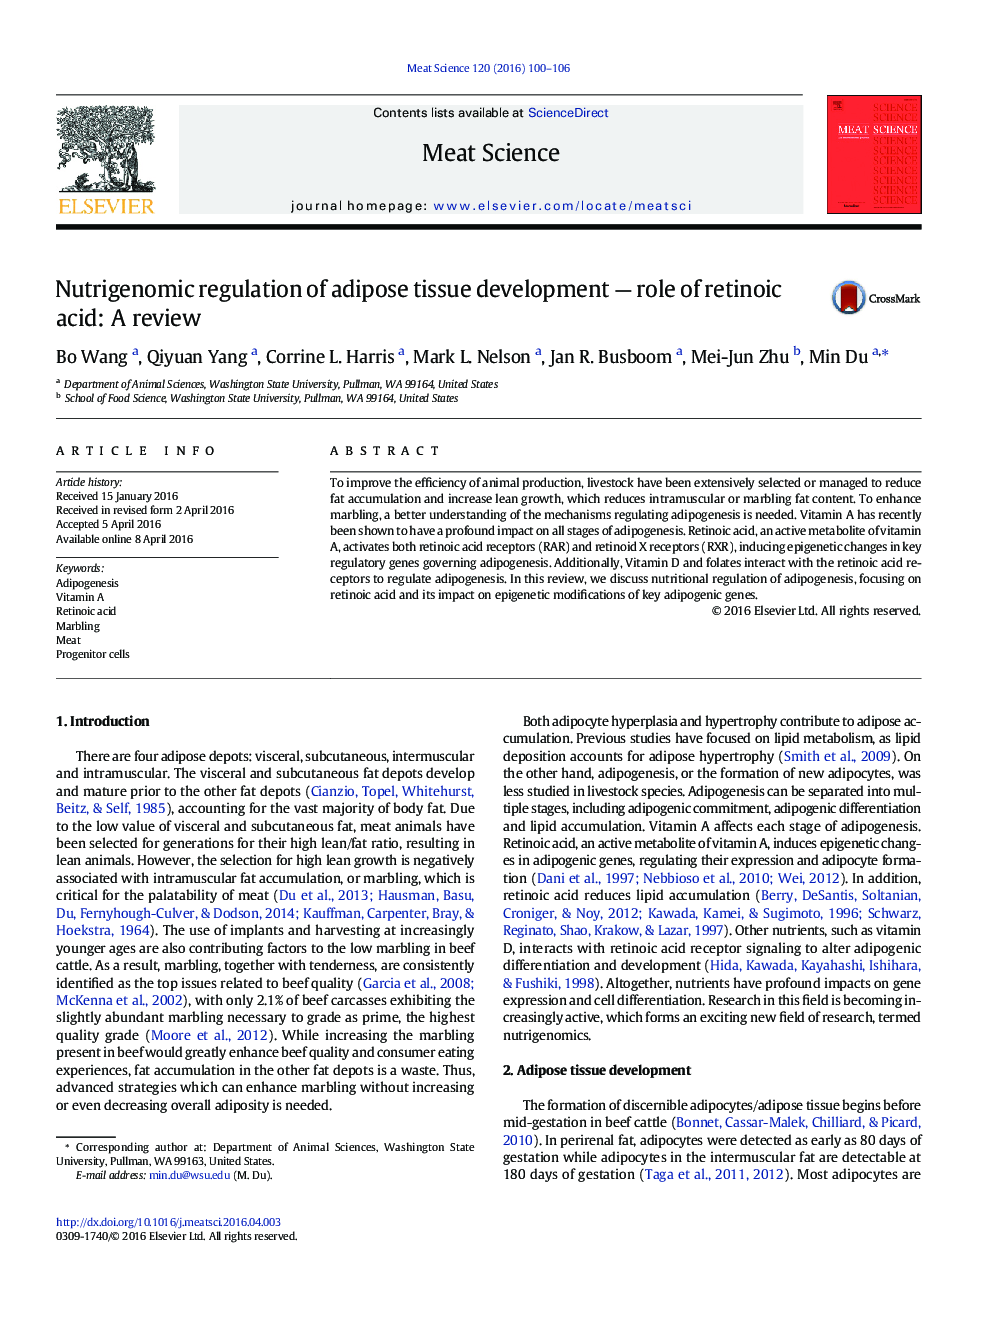 Nutrigenomic regulation of adipose tissue development — role of retinoic acid: A review